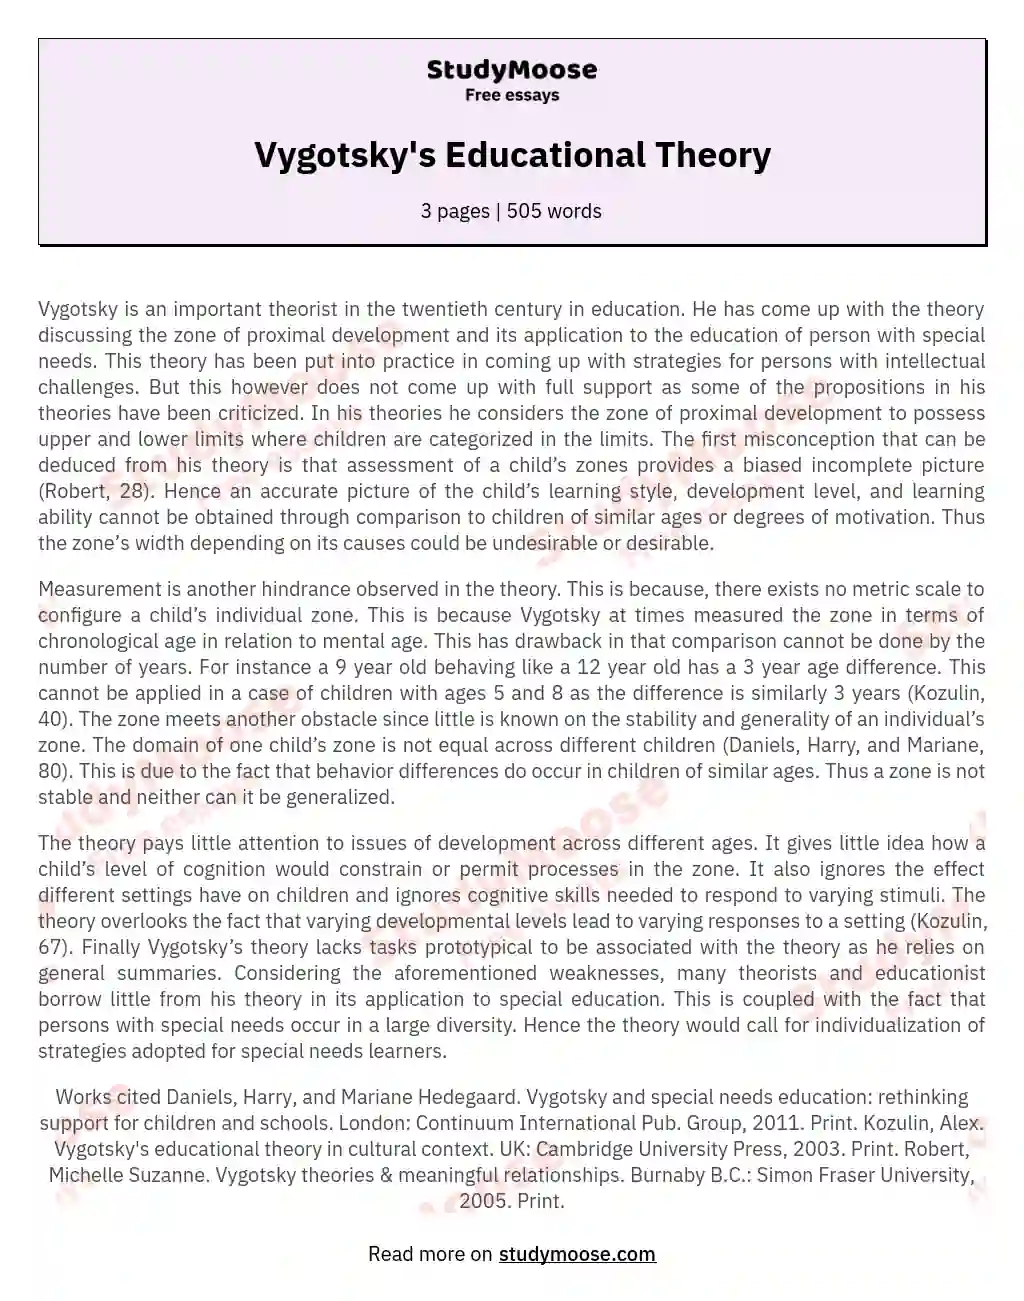 Vygotsky's Educational Theory